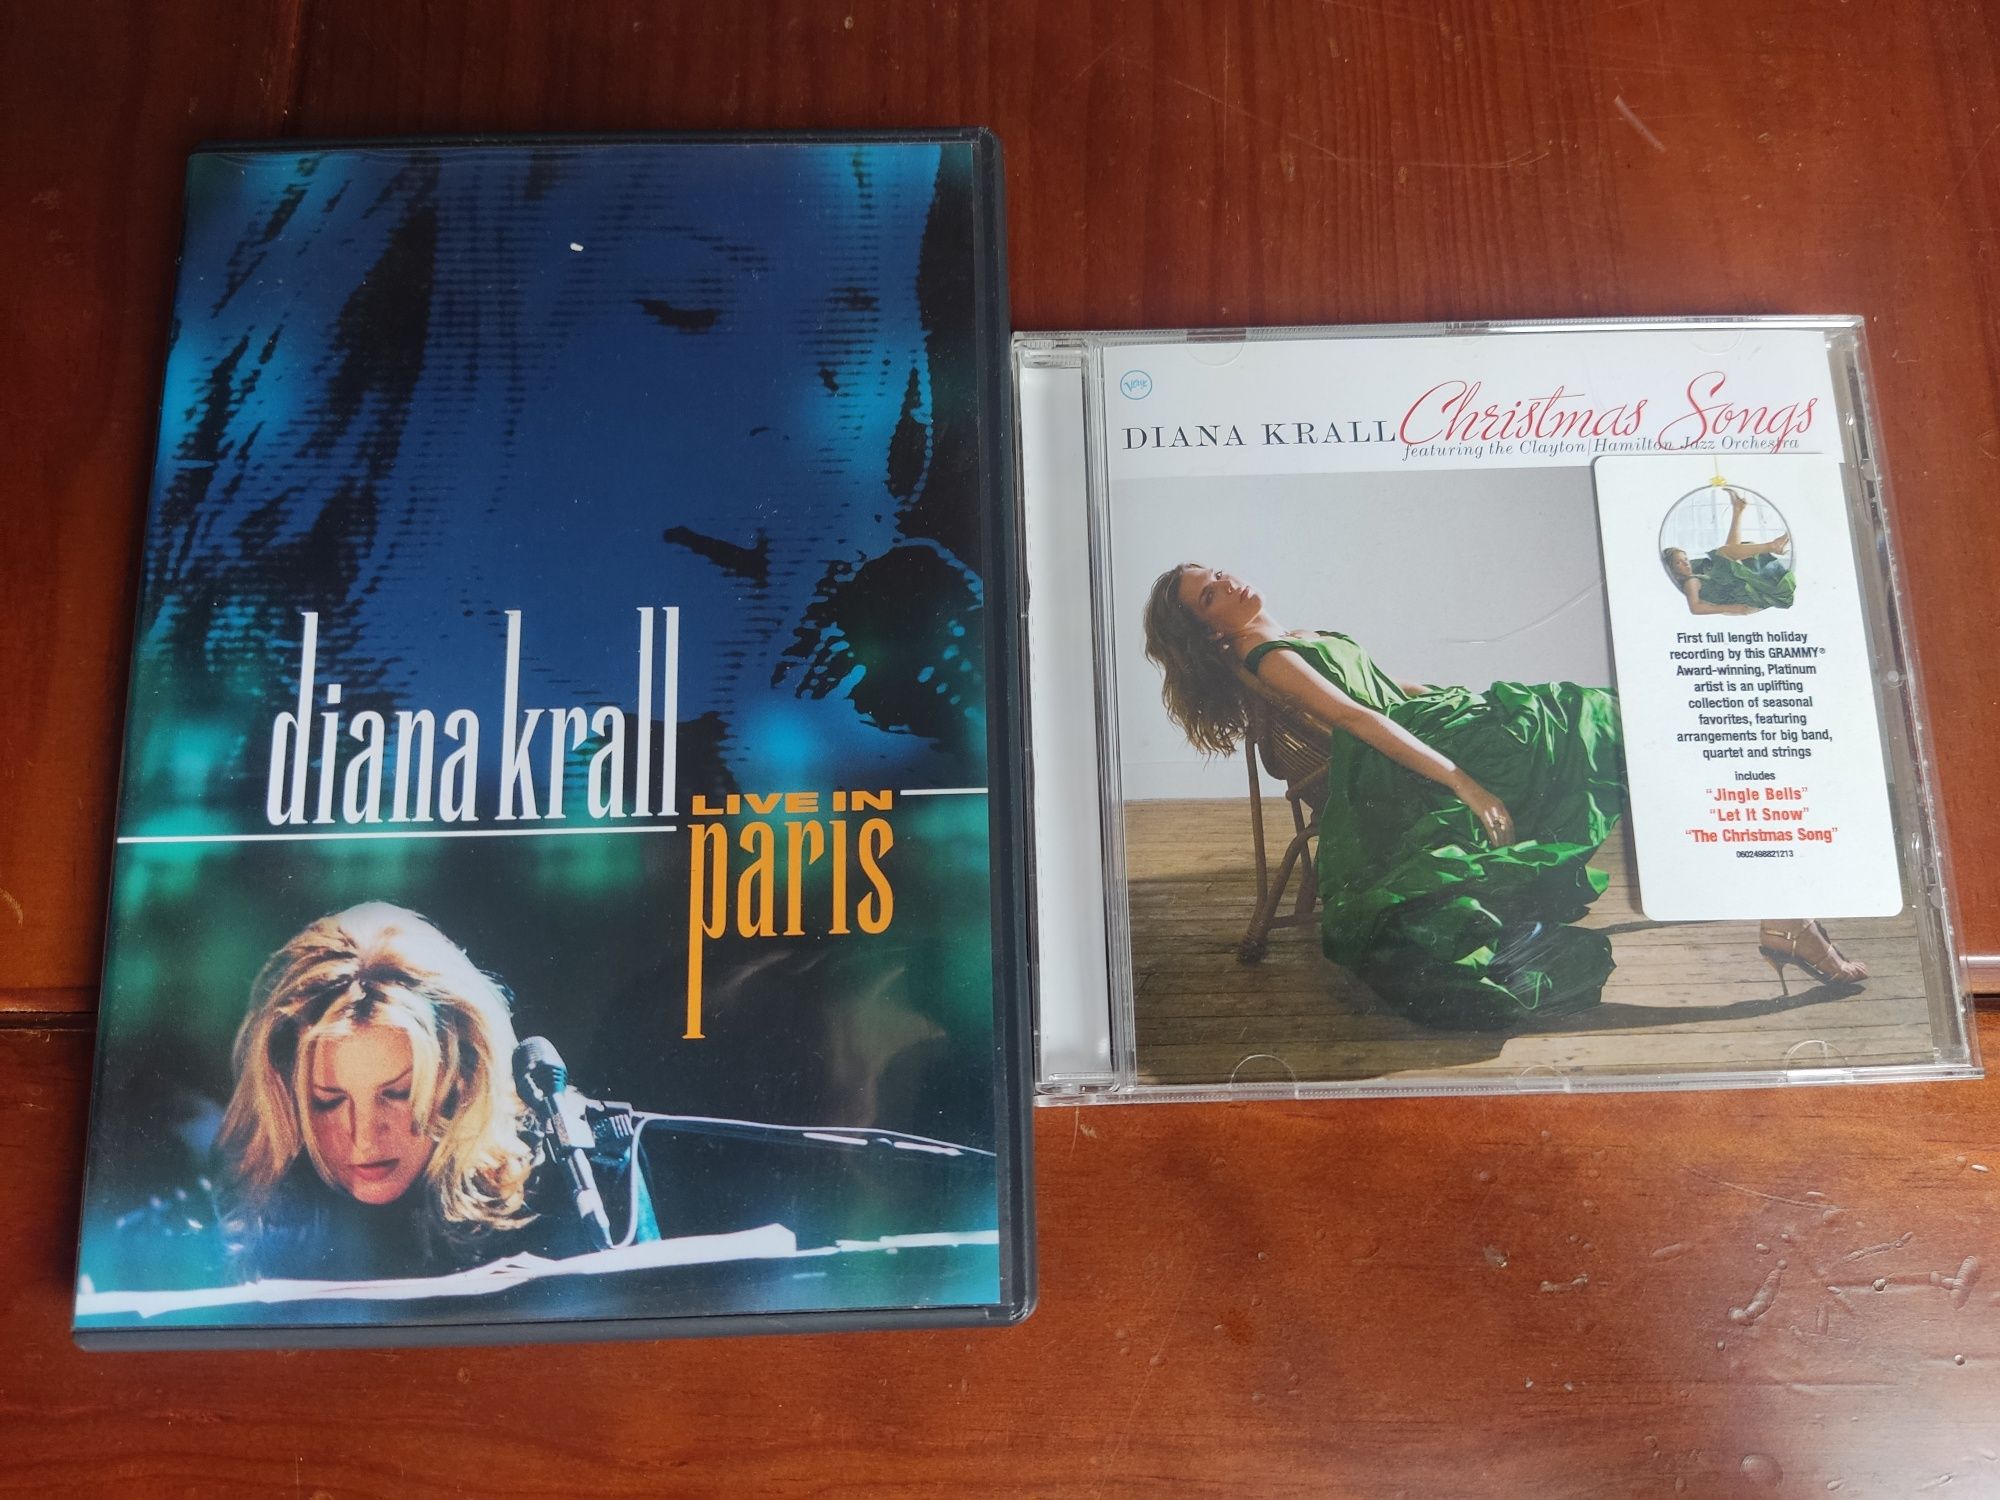 Diana Krall - Cd Christmas Songs + DVD live in Paris